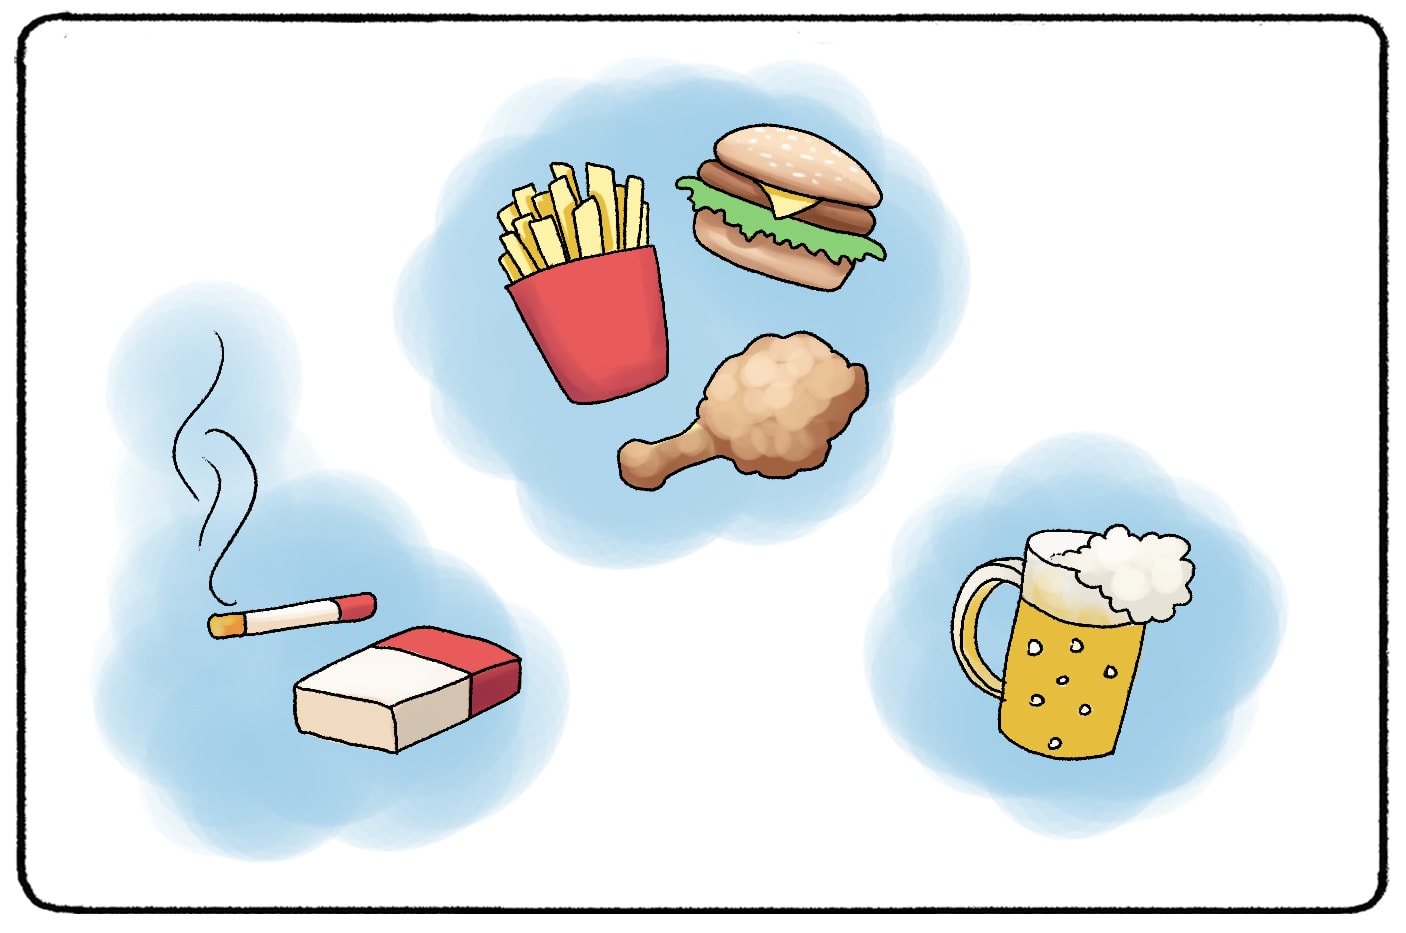 addictive substances: fast food, cigarettes, beer